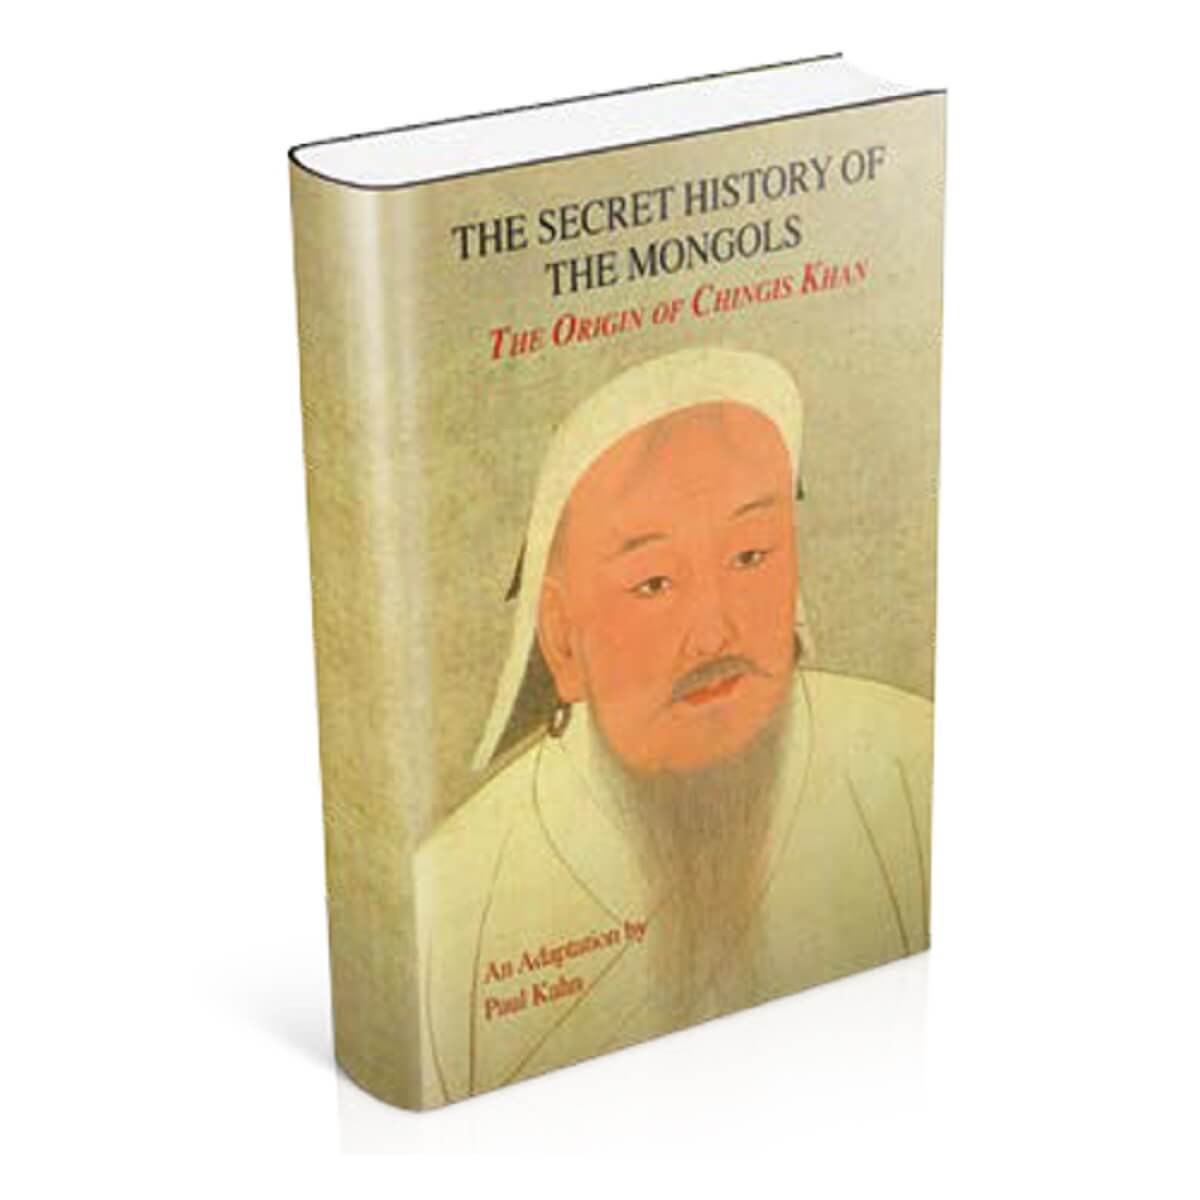 Secret history of the mongols